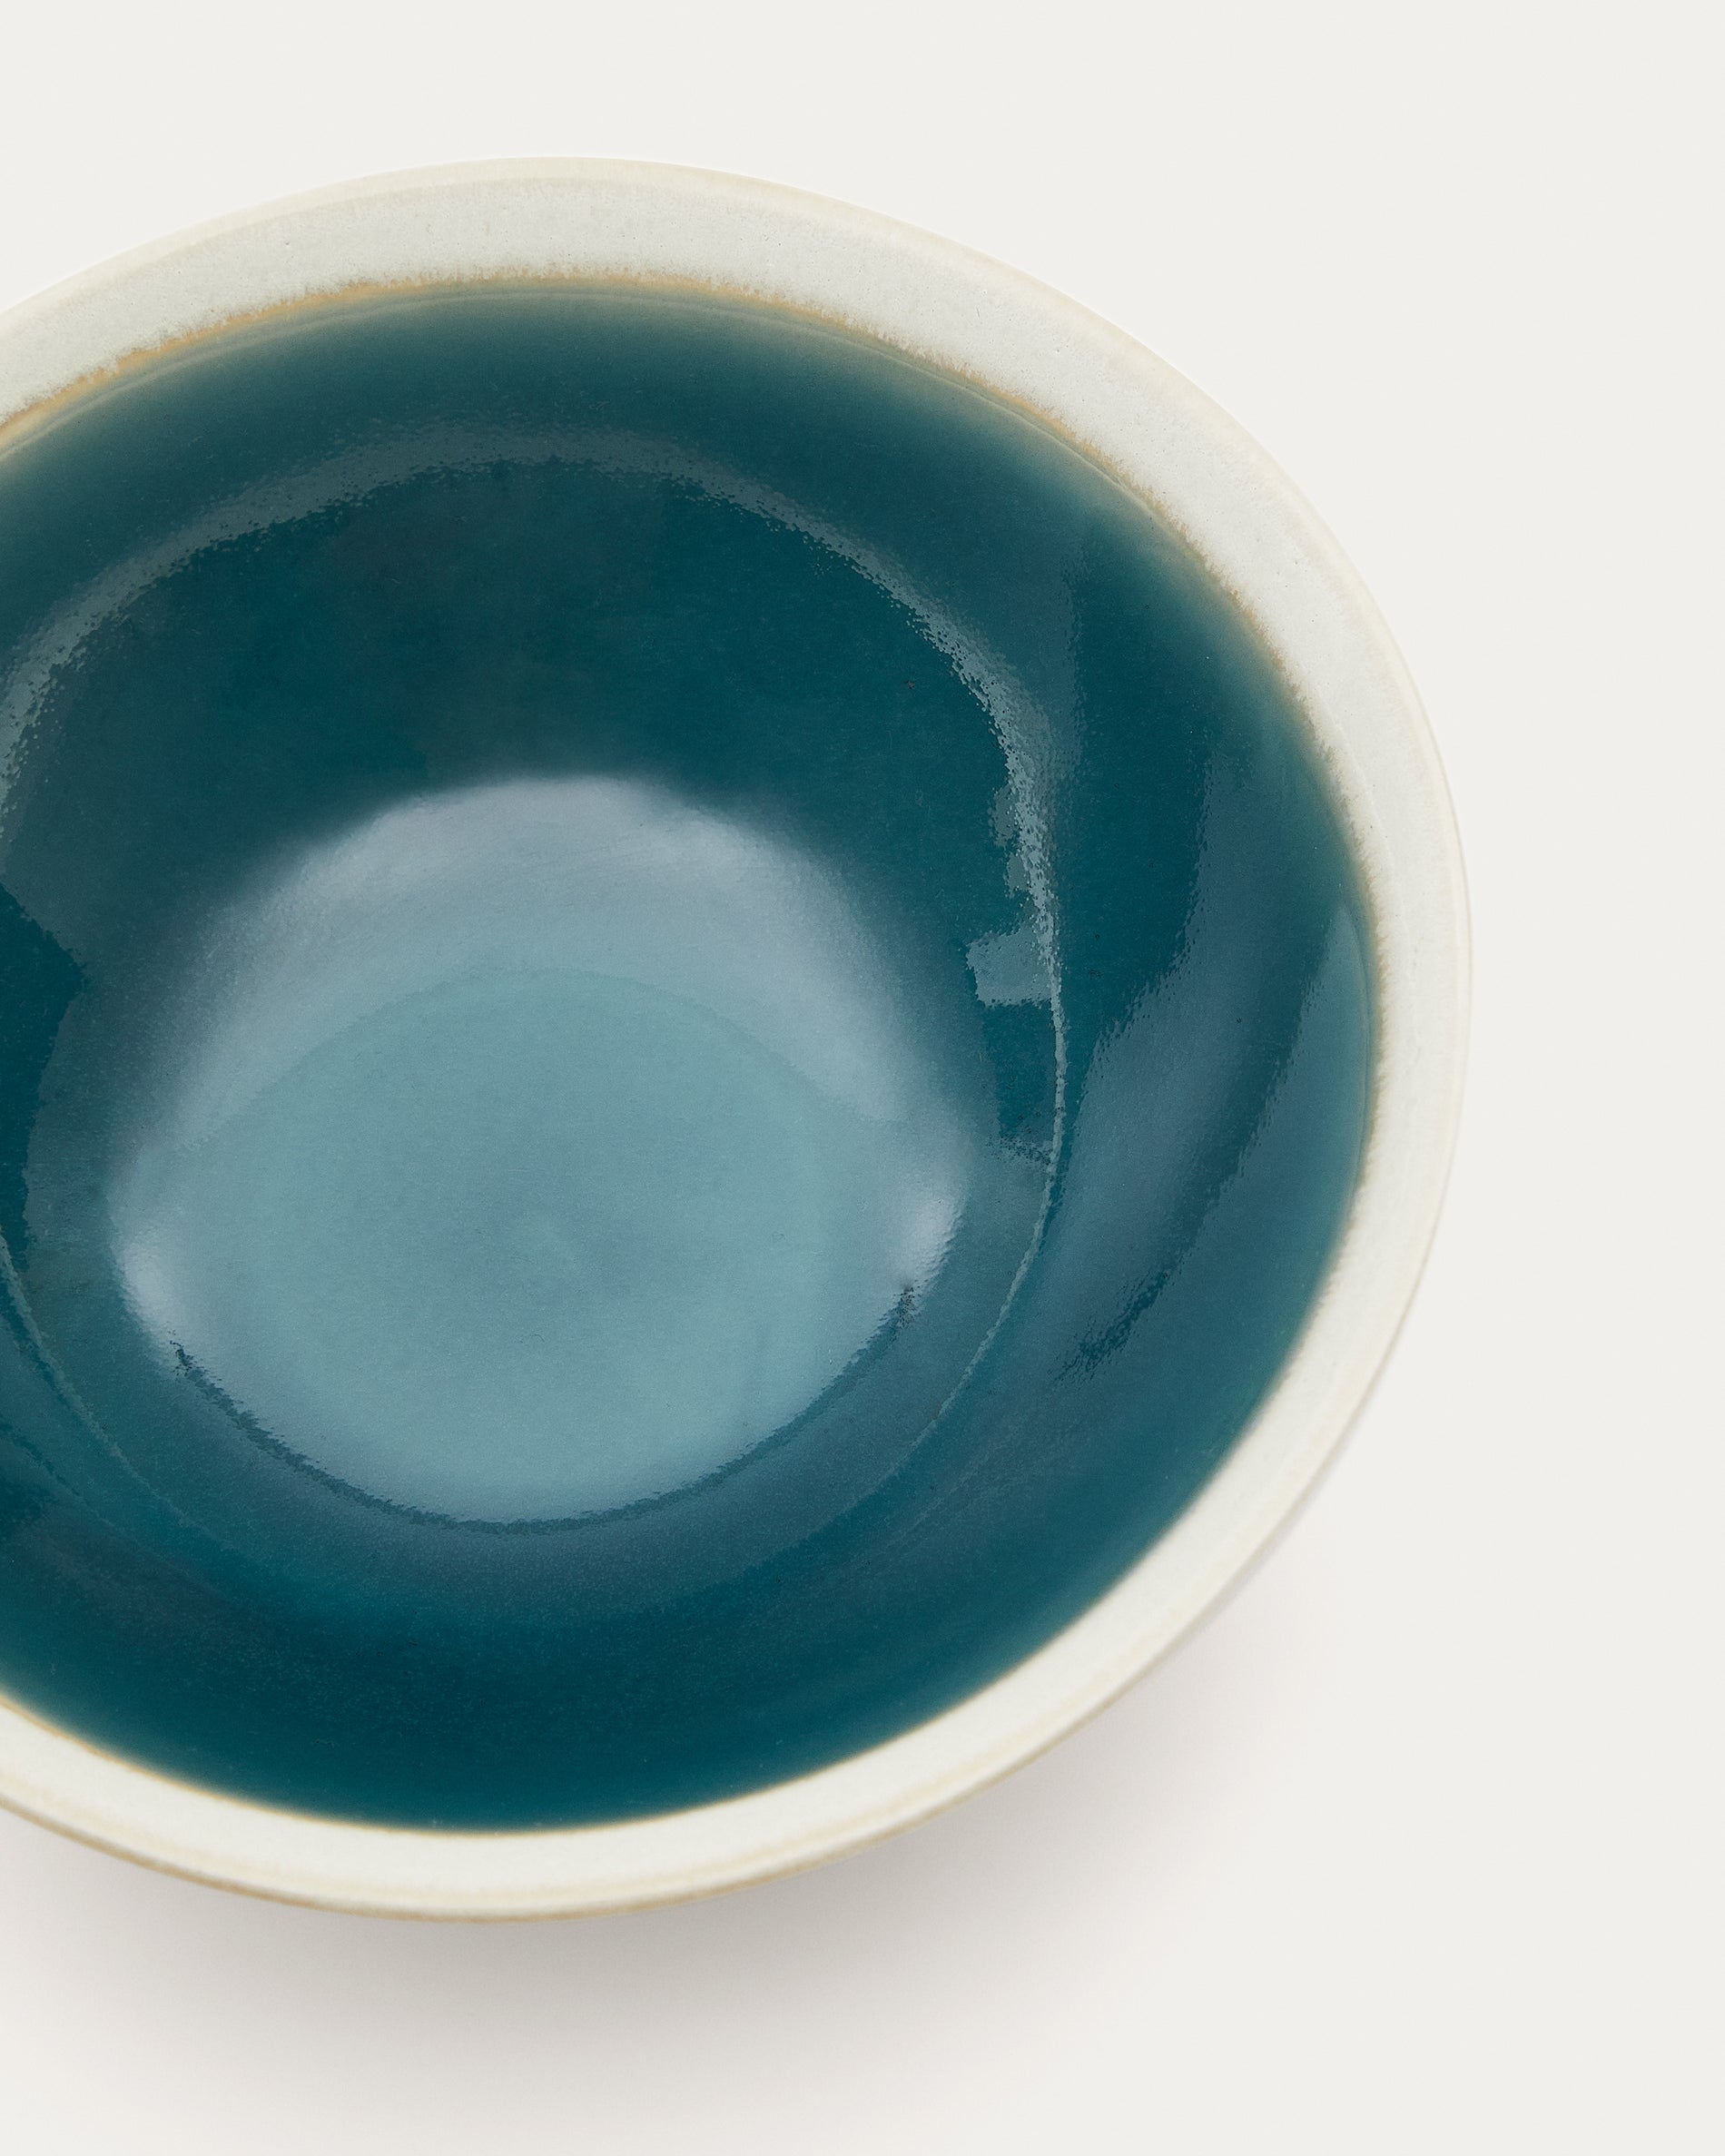 Sanet blue and white ceramic bowl